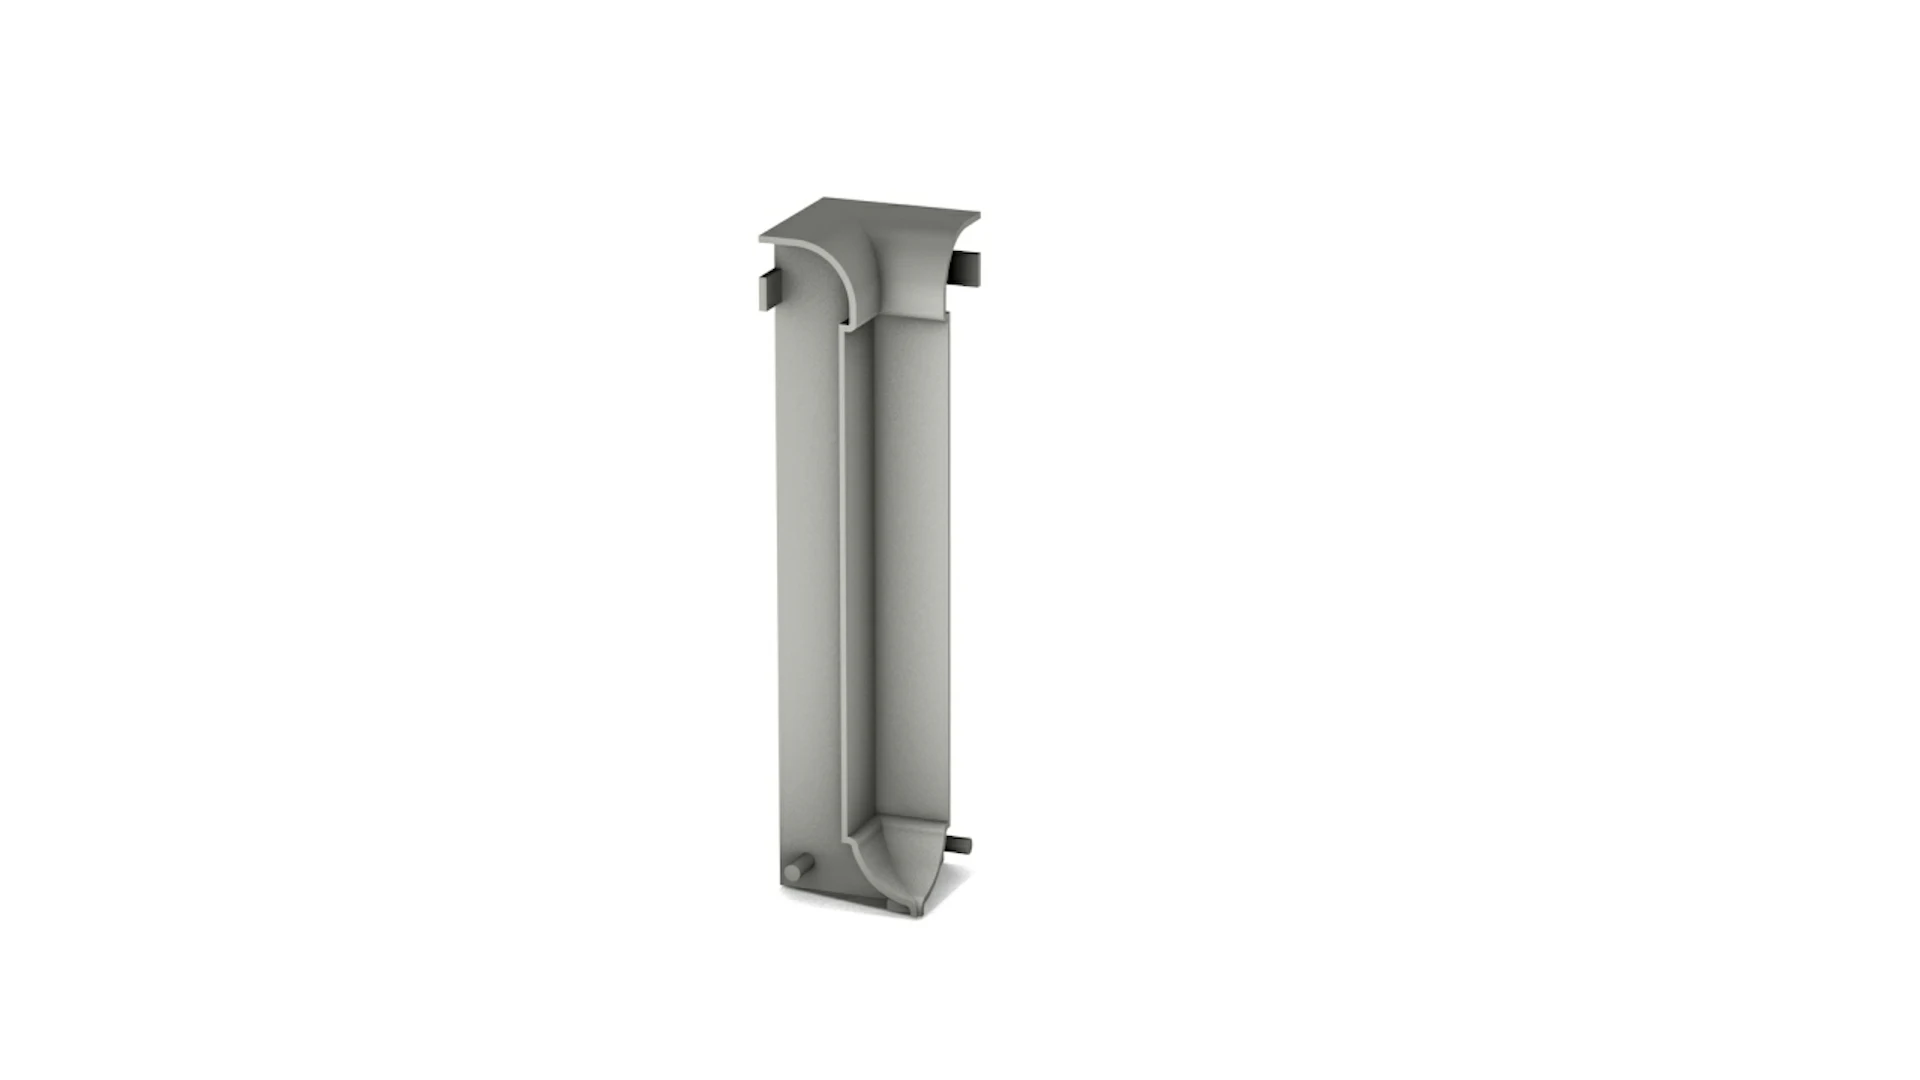 Prinz inside corner for aluminium skirting board / baseboard - 13x60 mm - titanium